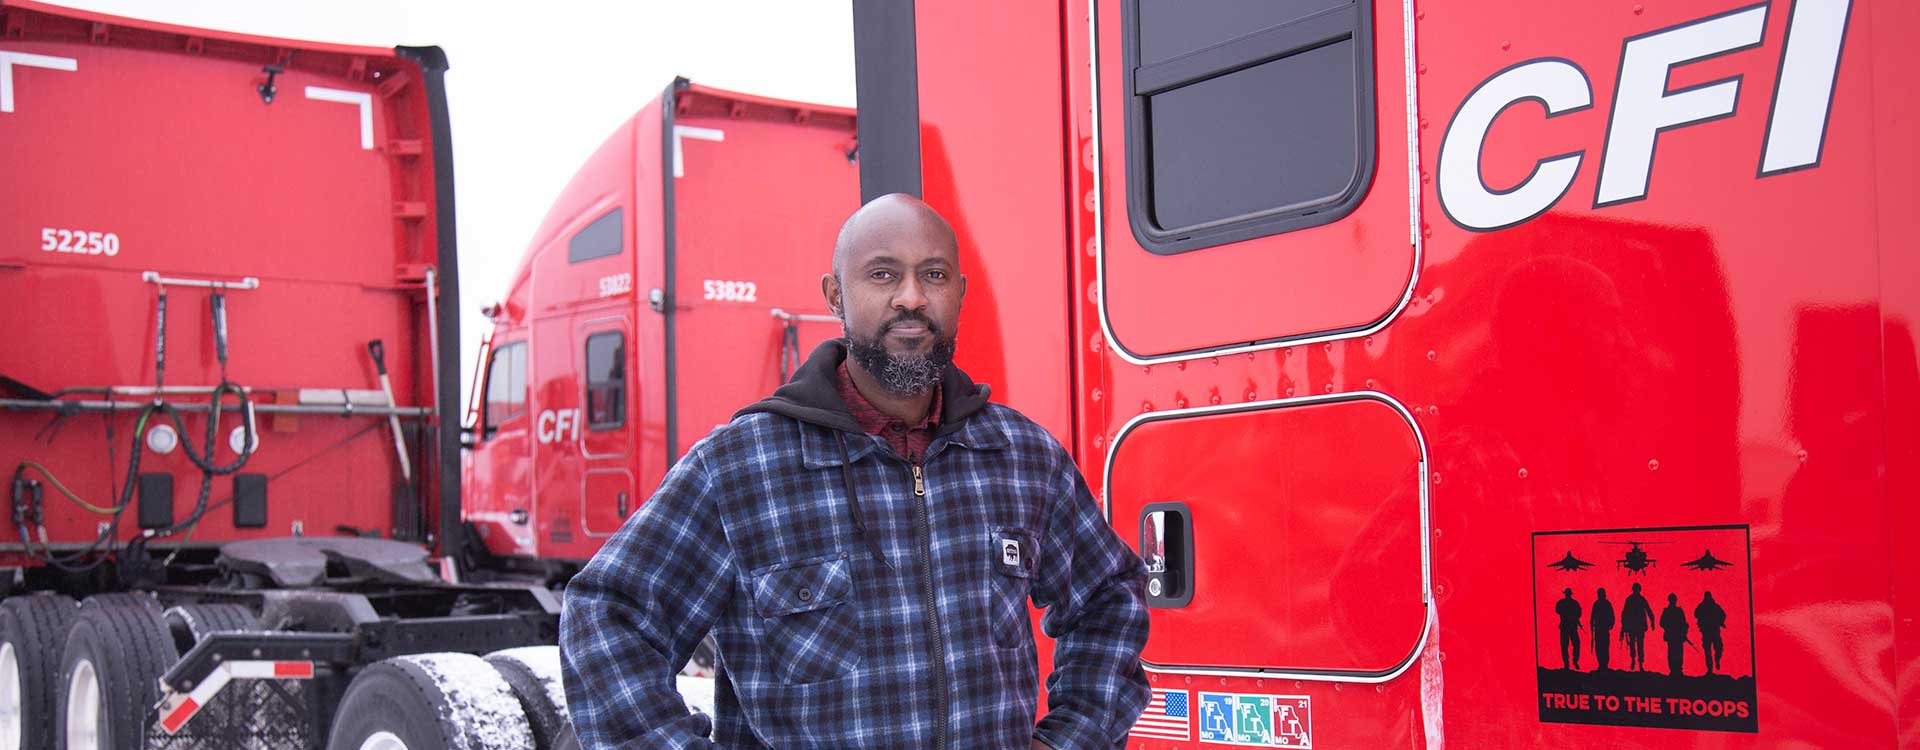 Man in front of red CFI trucks